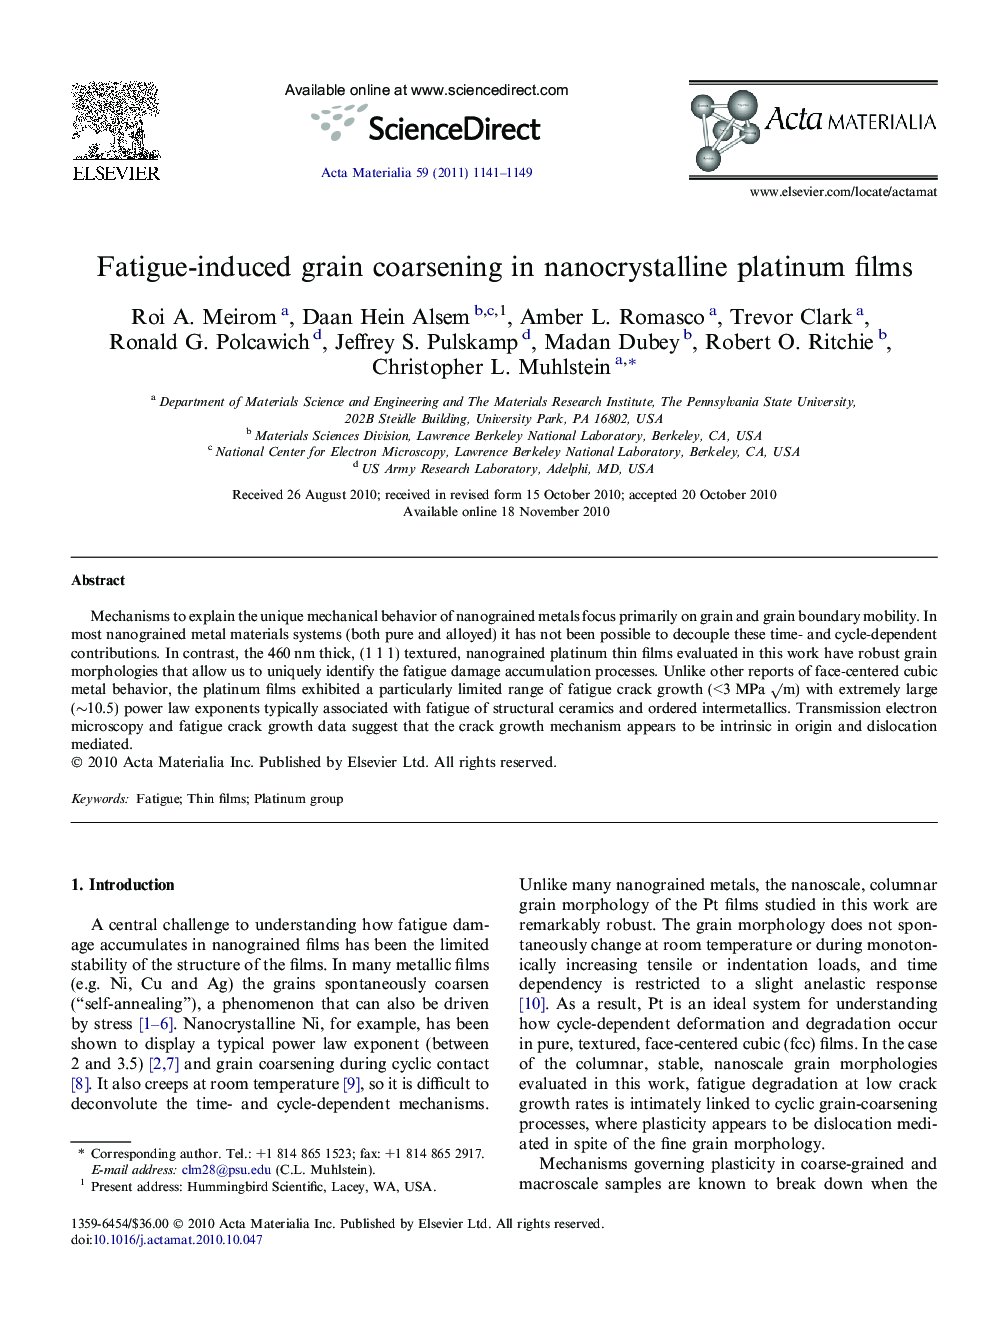 Fatigue-induced grain coarsening in nanocrystalline platinum films